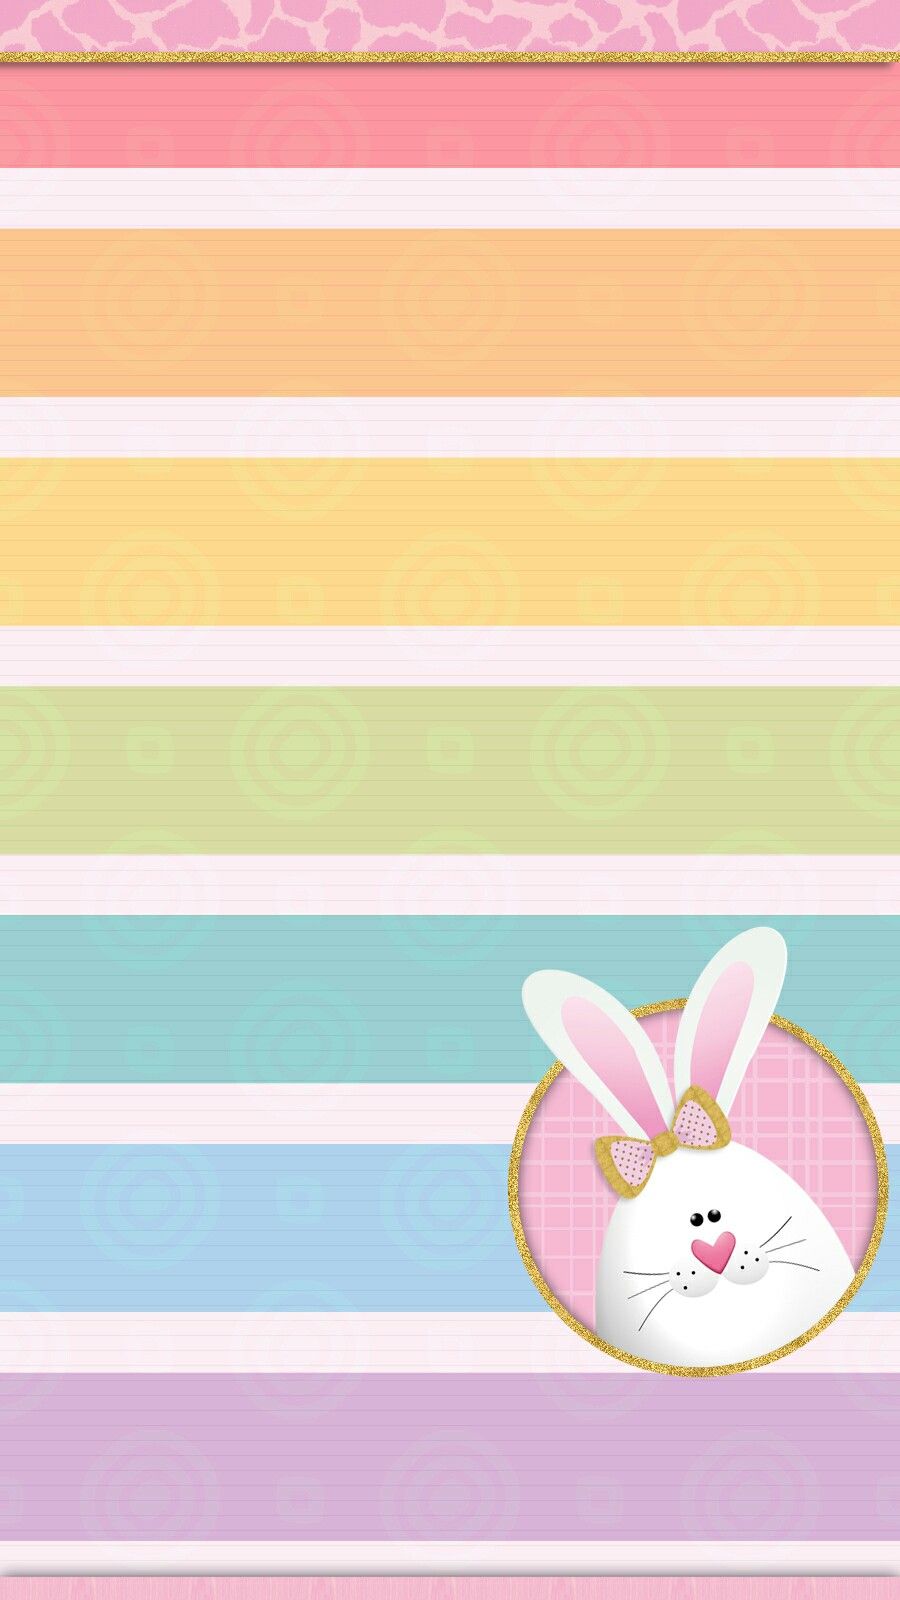 Easter bunny wallpaper iphone. Easter wallpaper, Bunny wallpaper